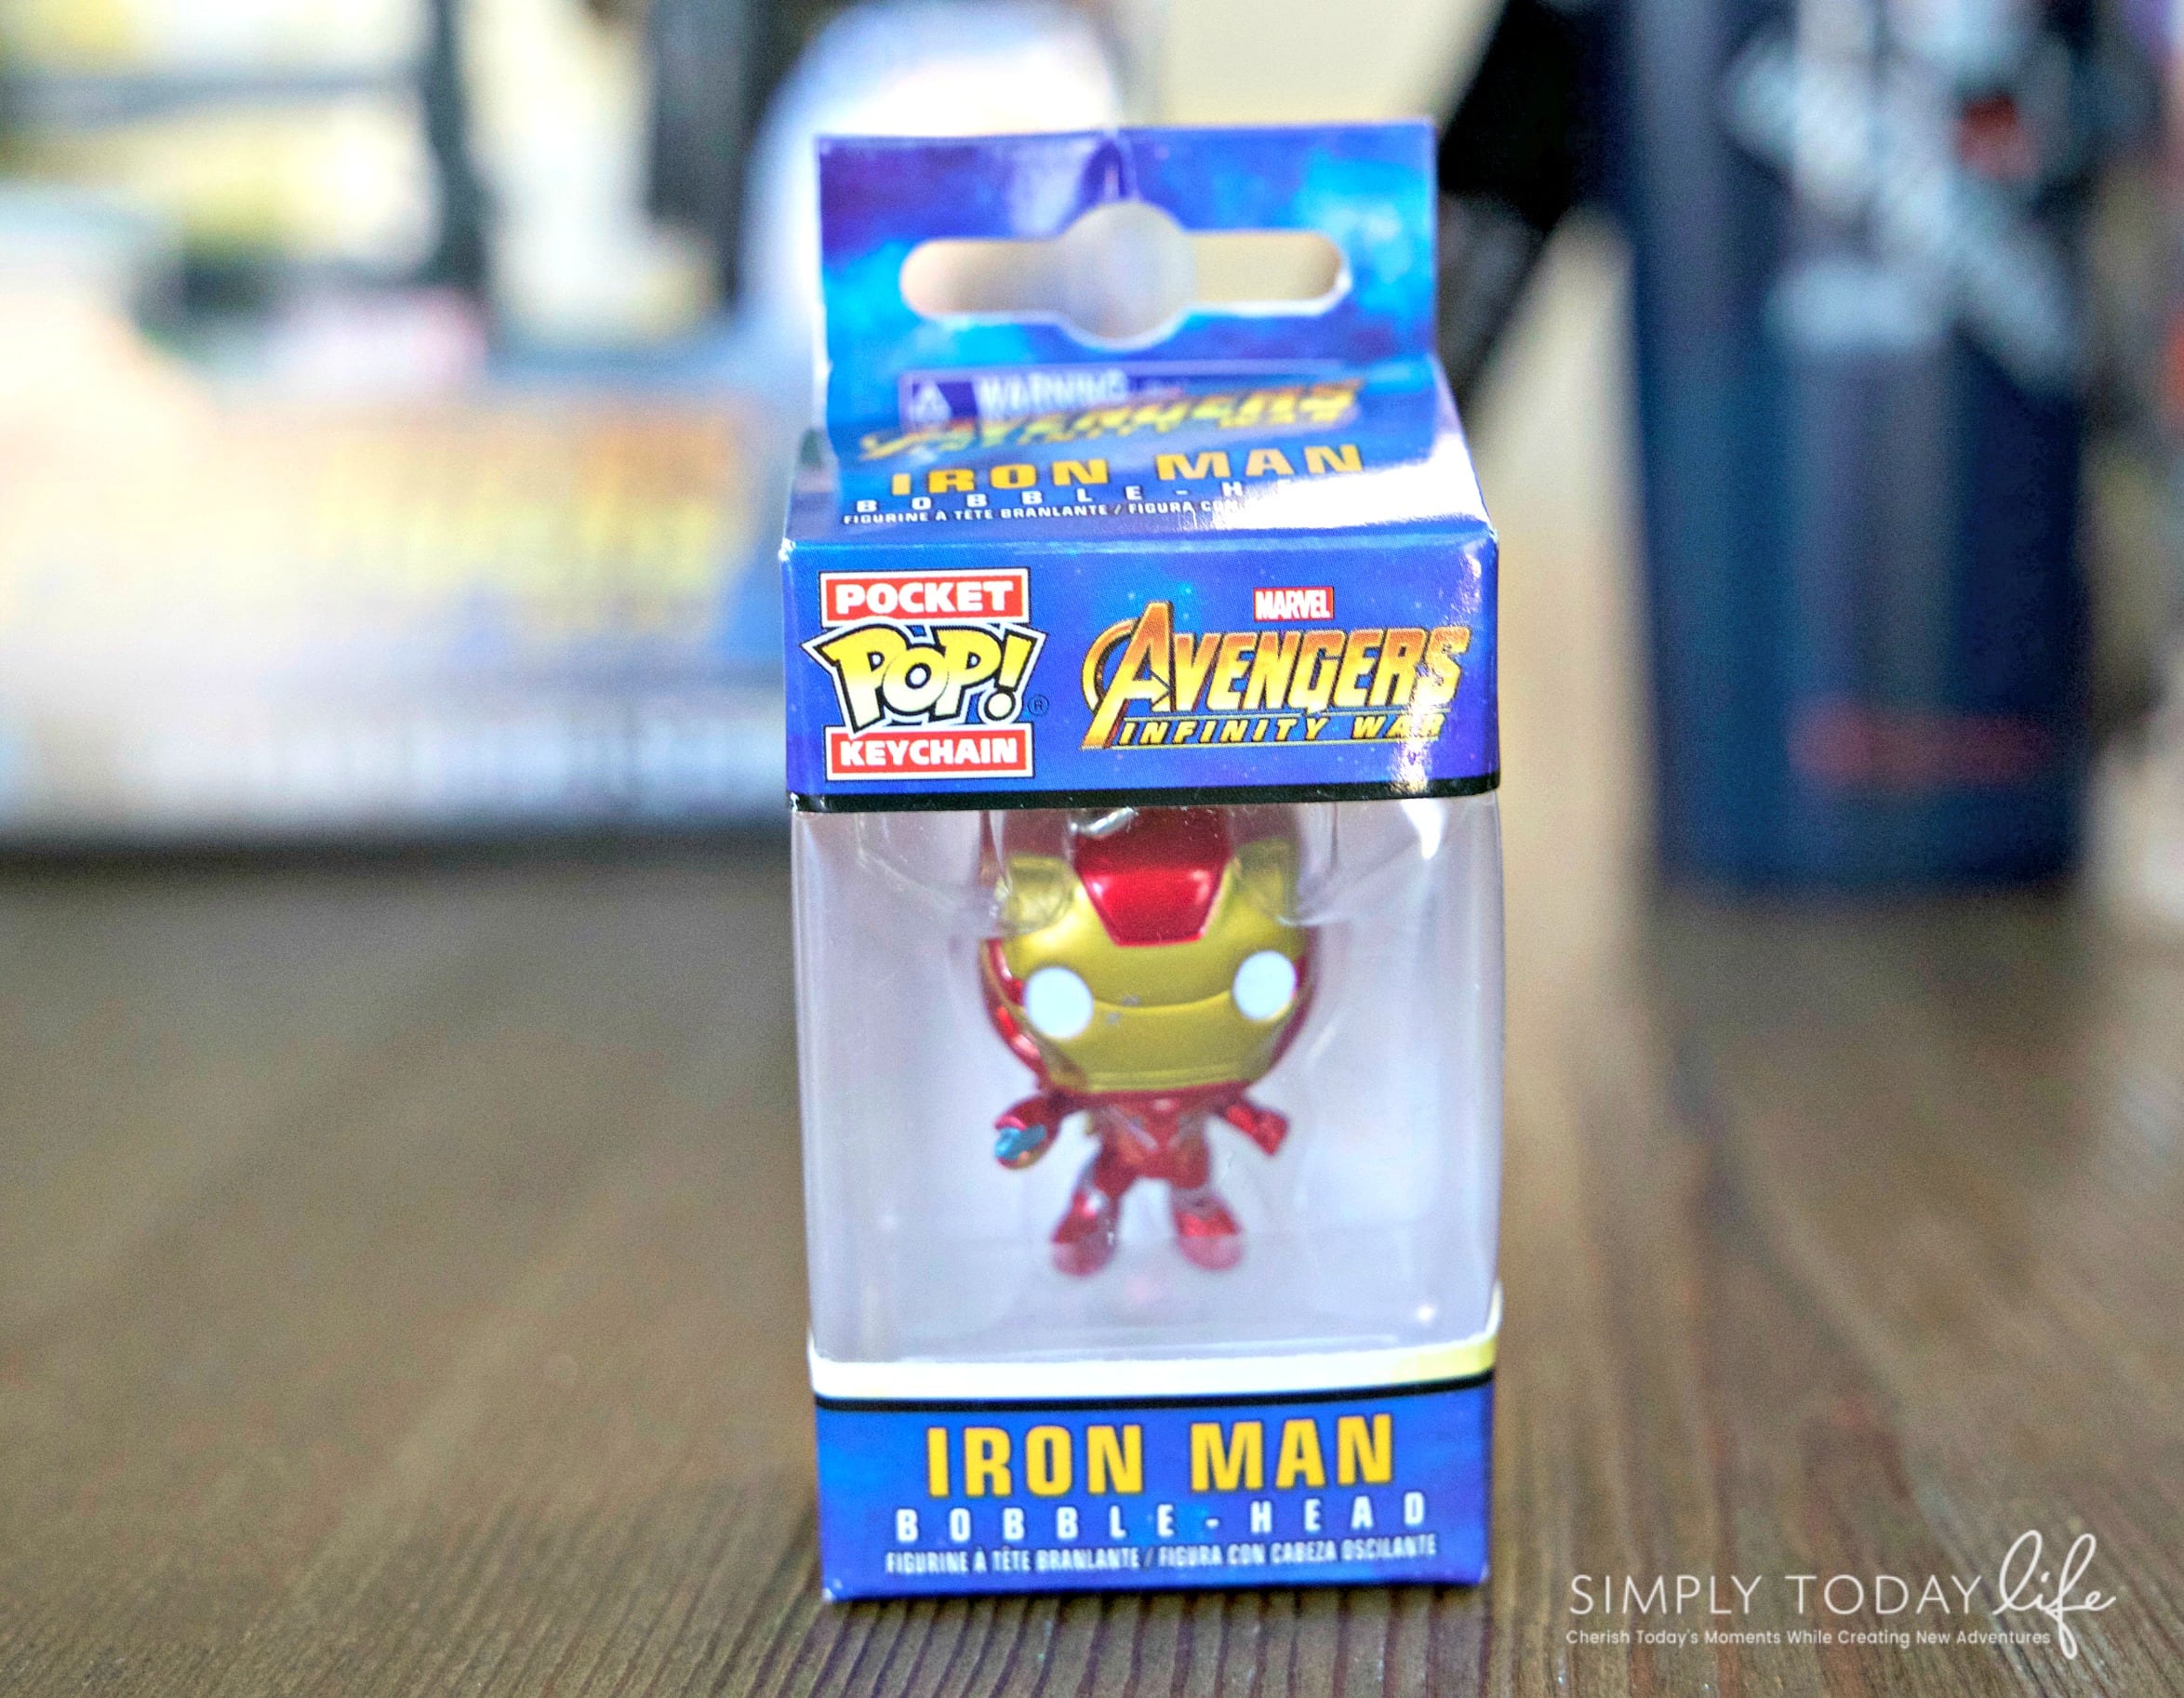 Marvel Avengers Infinity War Iron Man Pocket POP! Bobble Head Key Chain